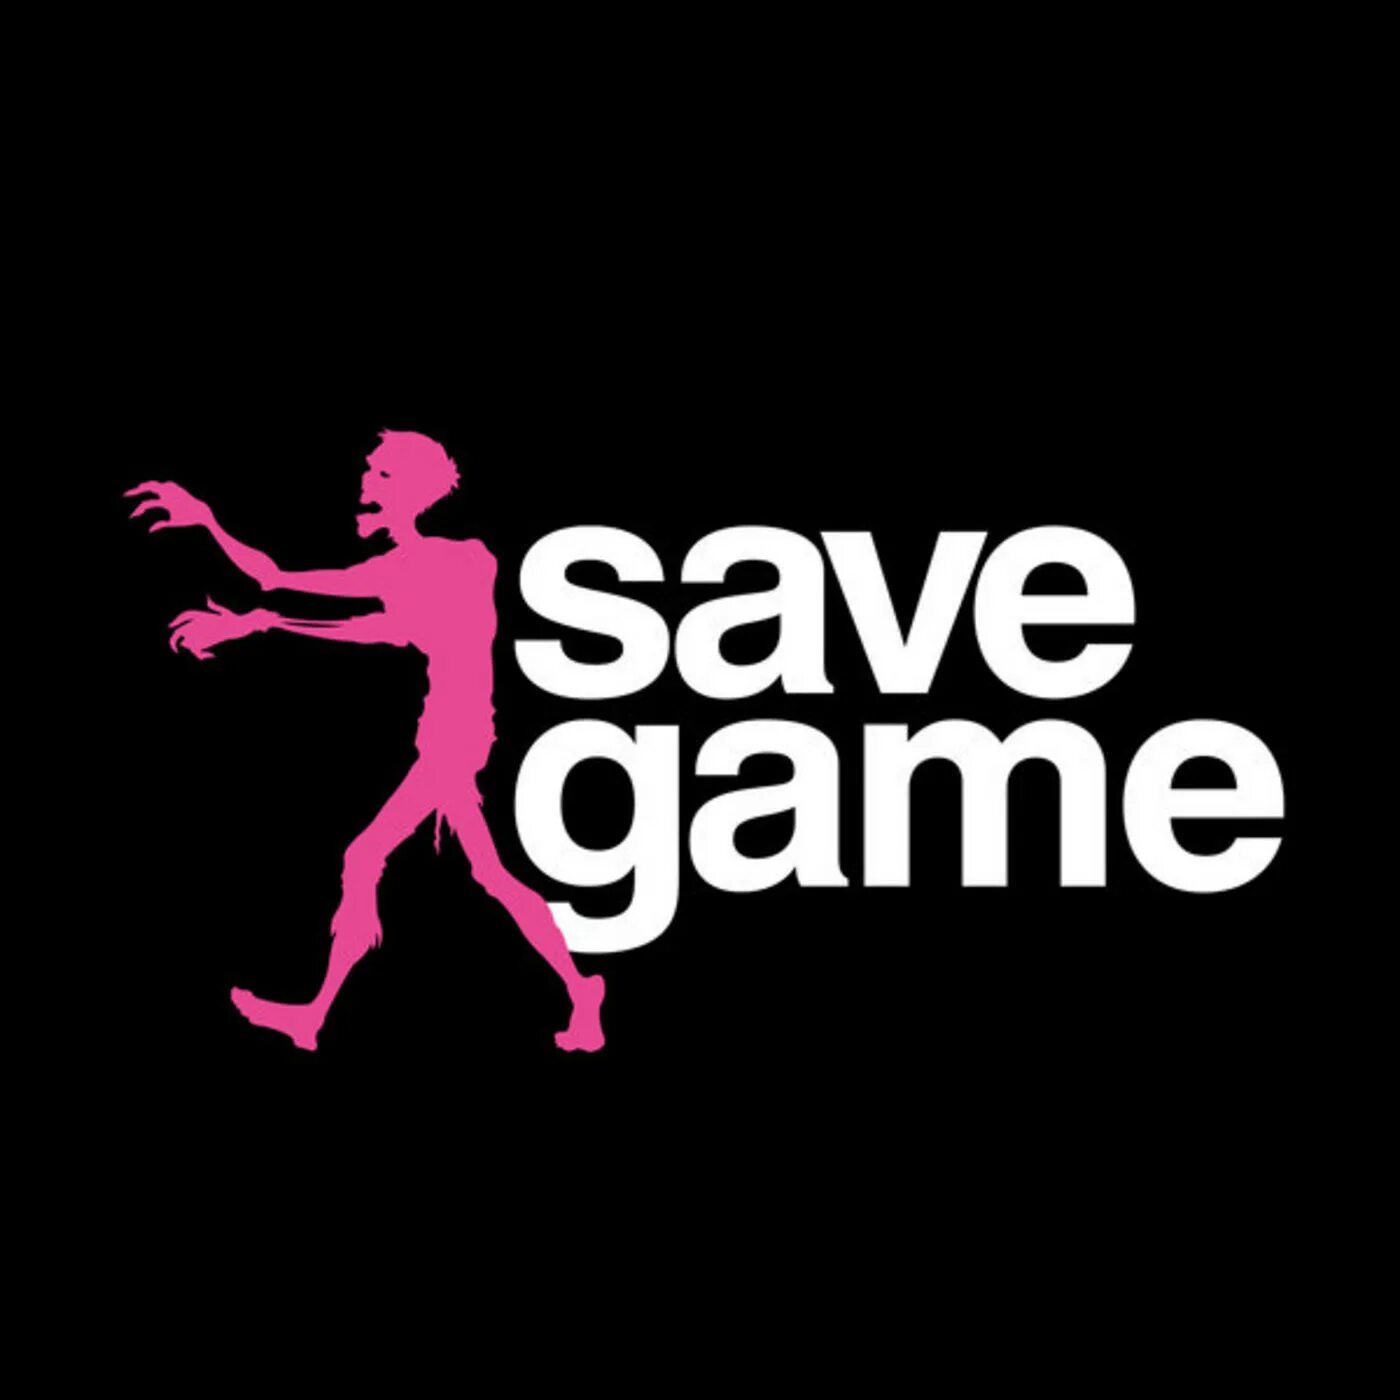 Game save files. Save game. SAVEGAME. Save the game игра. Save my game.